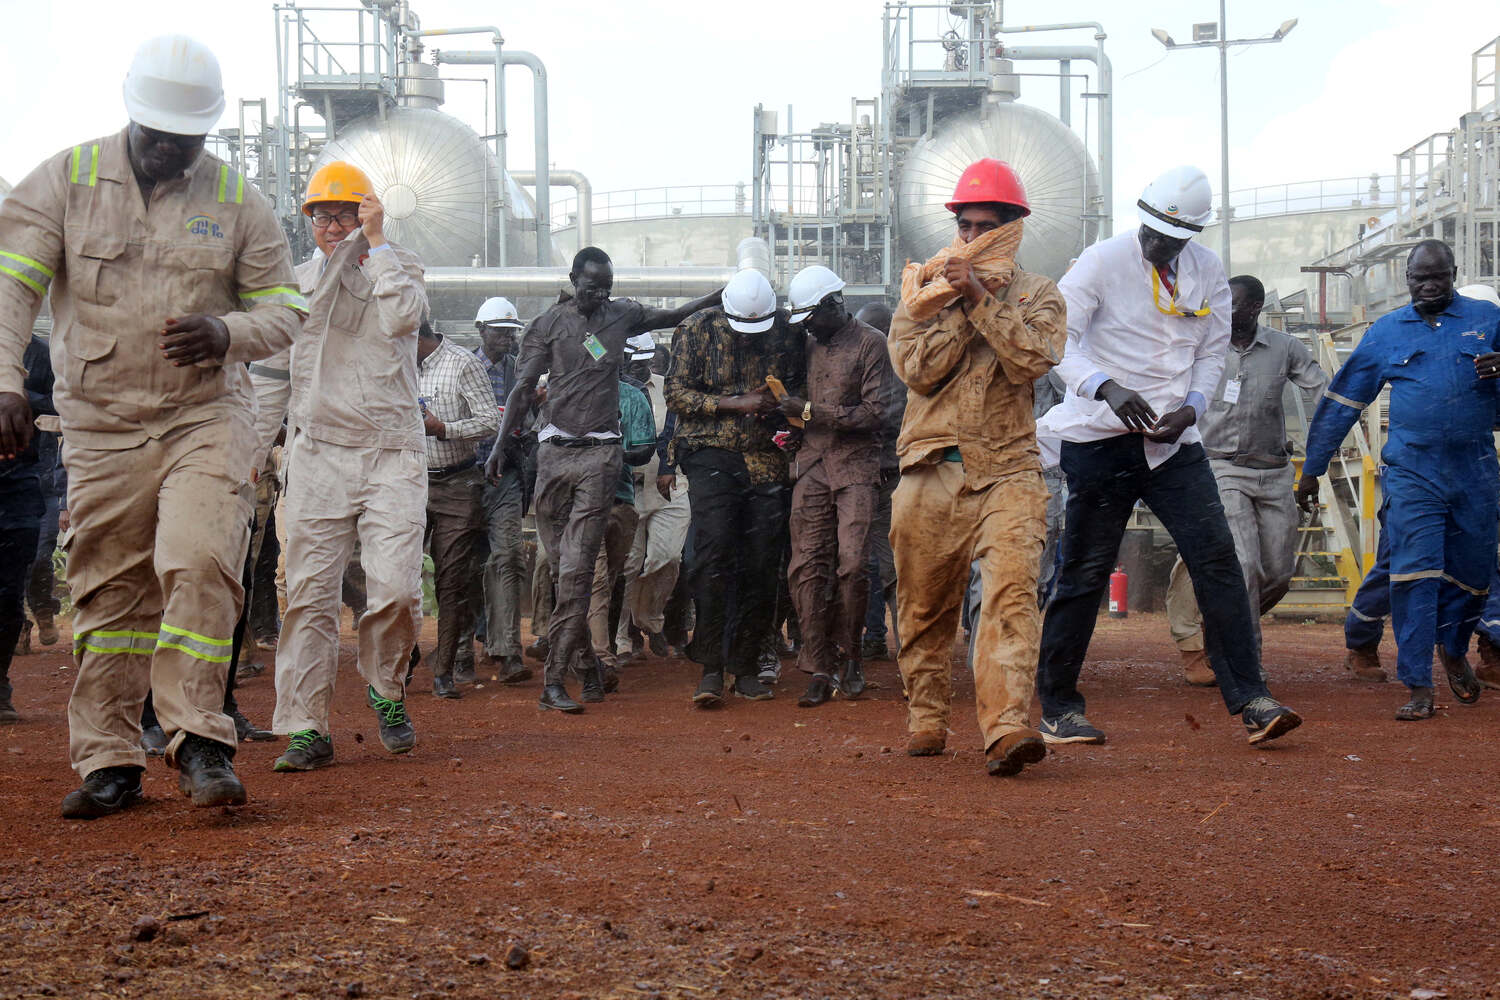 South Sudan's former Minister of Petroleum, Ezekiel Lol Gatkuoth, visits the Al-Nar oil fields north of Bentiu, South Sudan, in April 2019